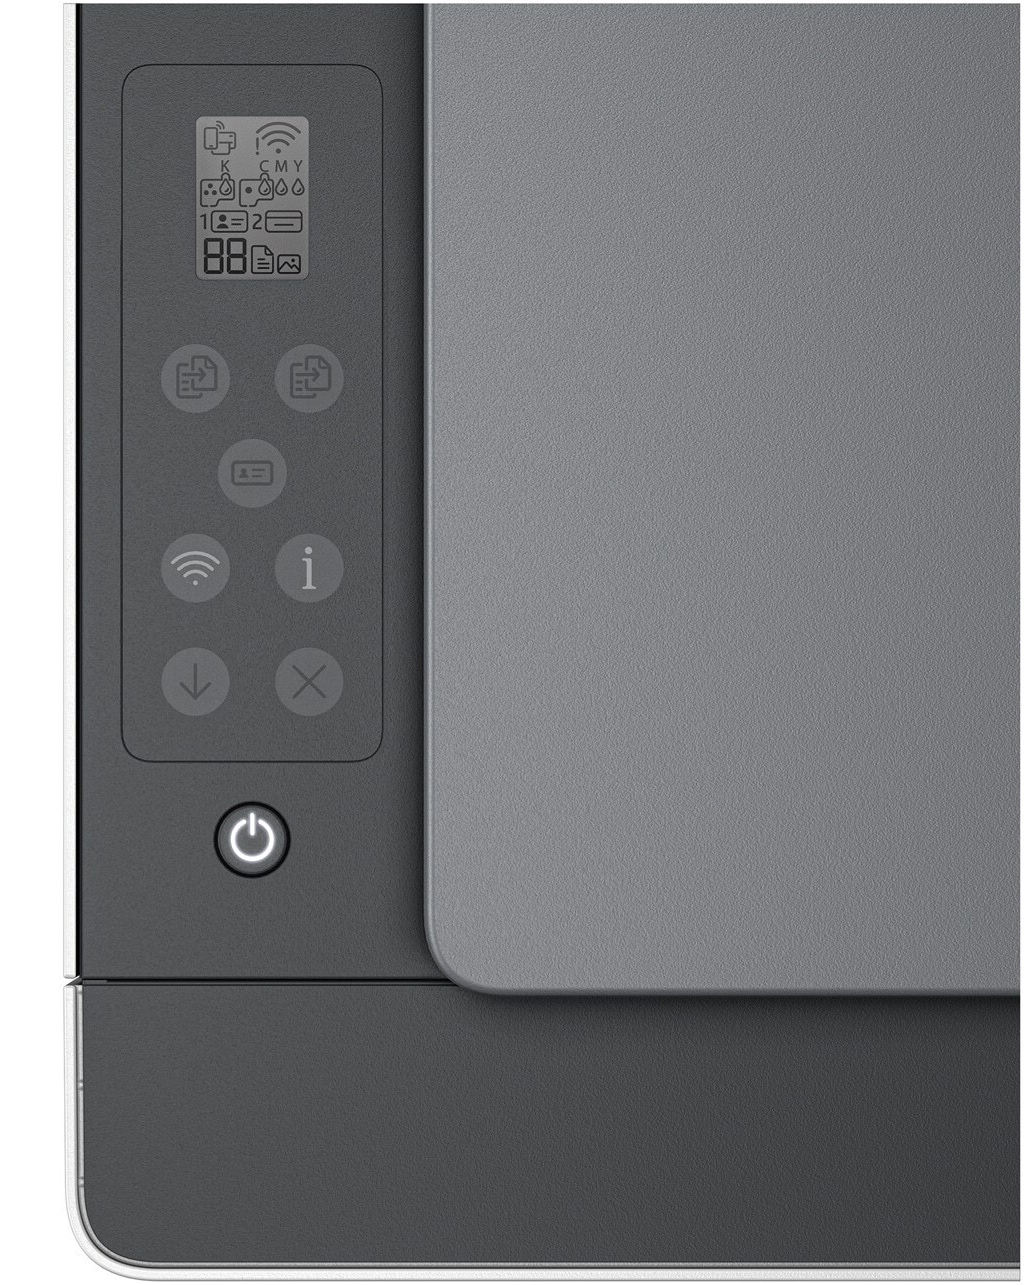 HP - Impressora Jato de Tinta HP Smart Tank 5105 All-in-ONE WiFi